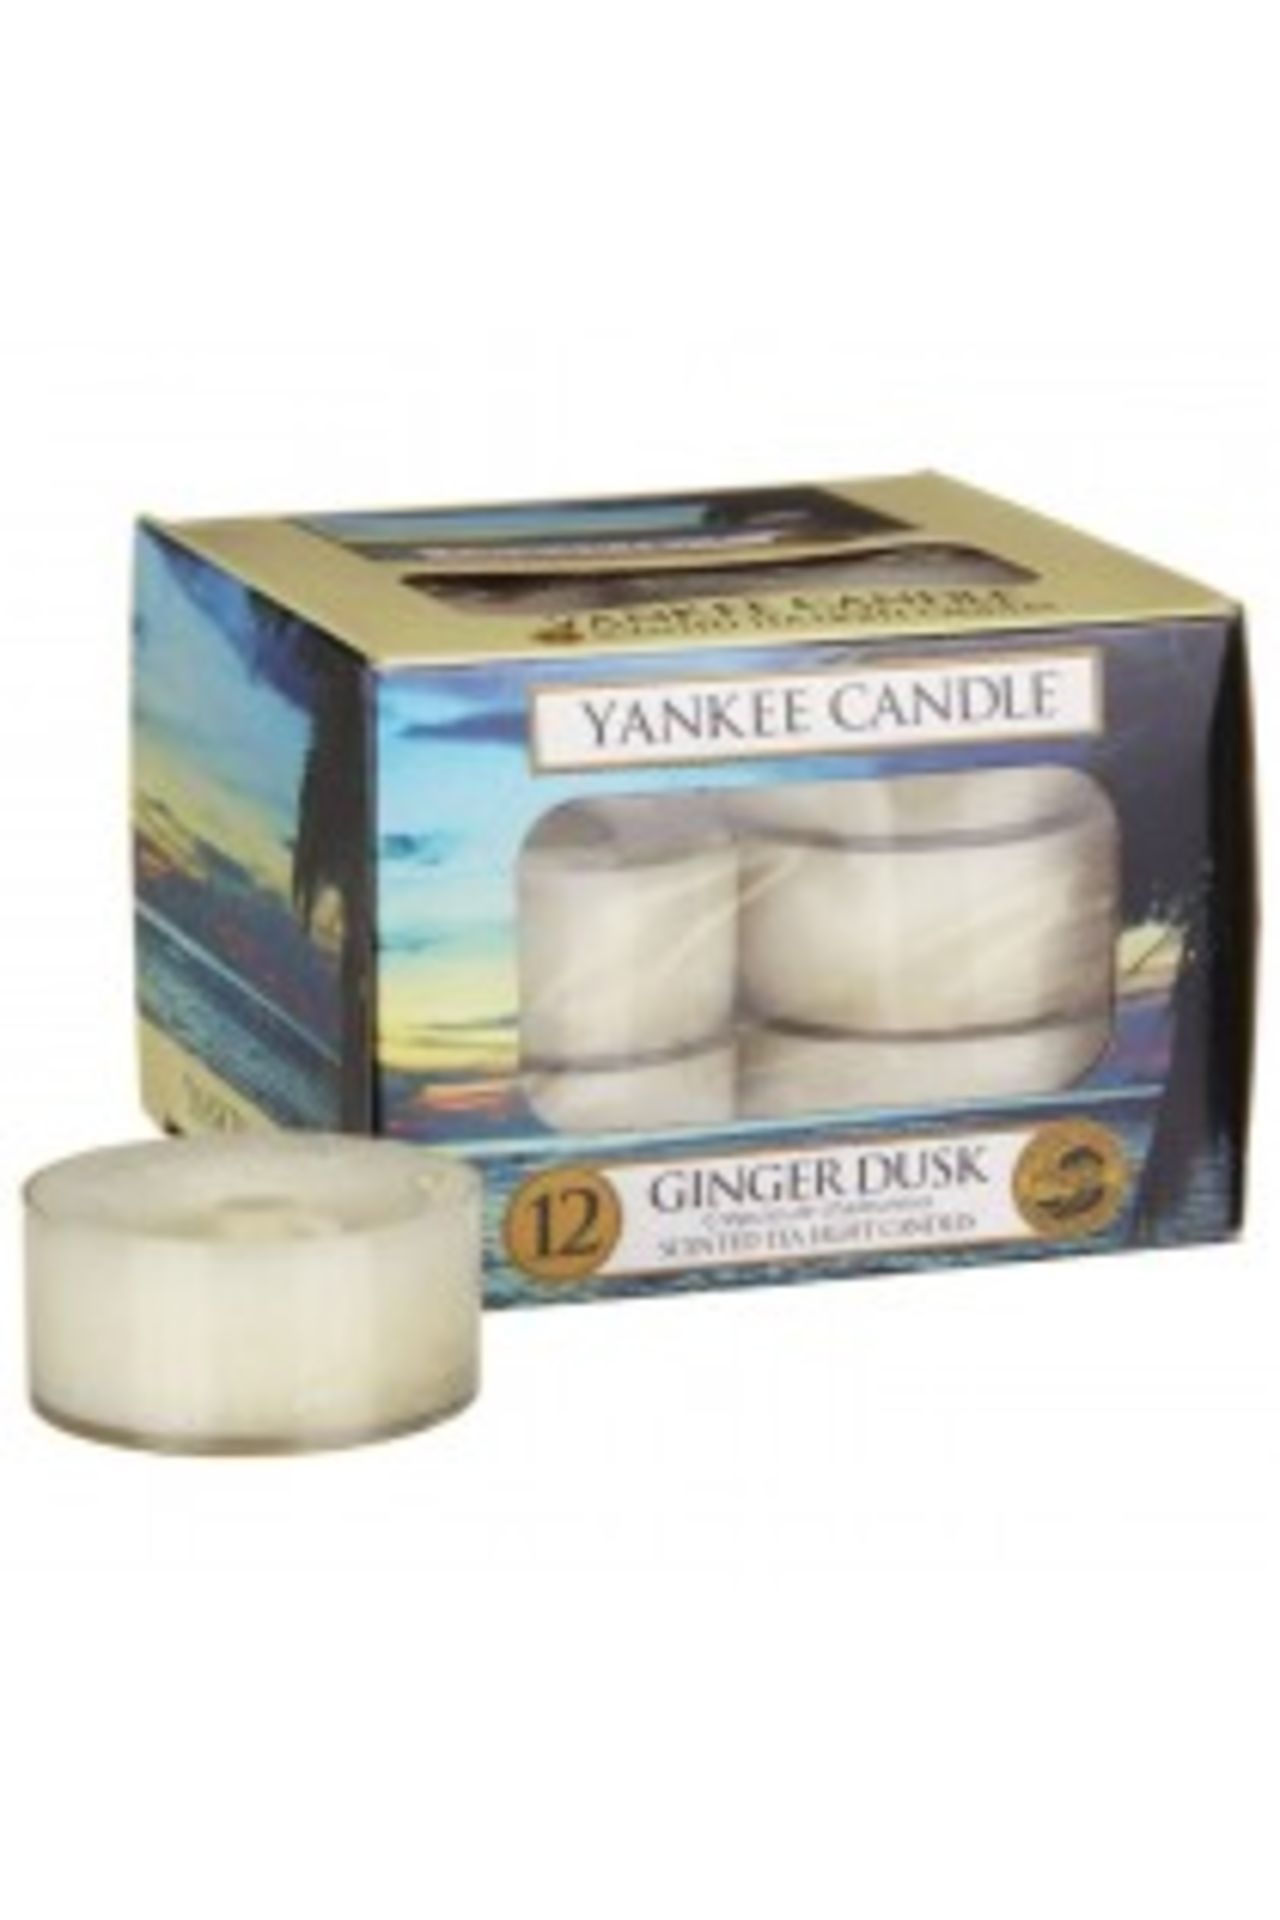 V Brand New 12 Yankee Candle Scented Tea Light Candles Ginger Dusk eBay Price £6.95